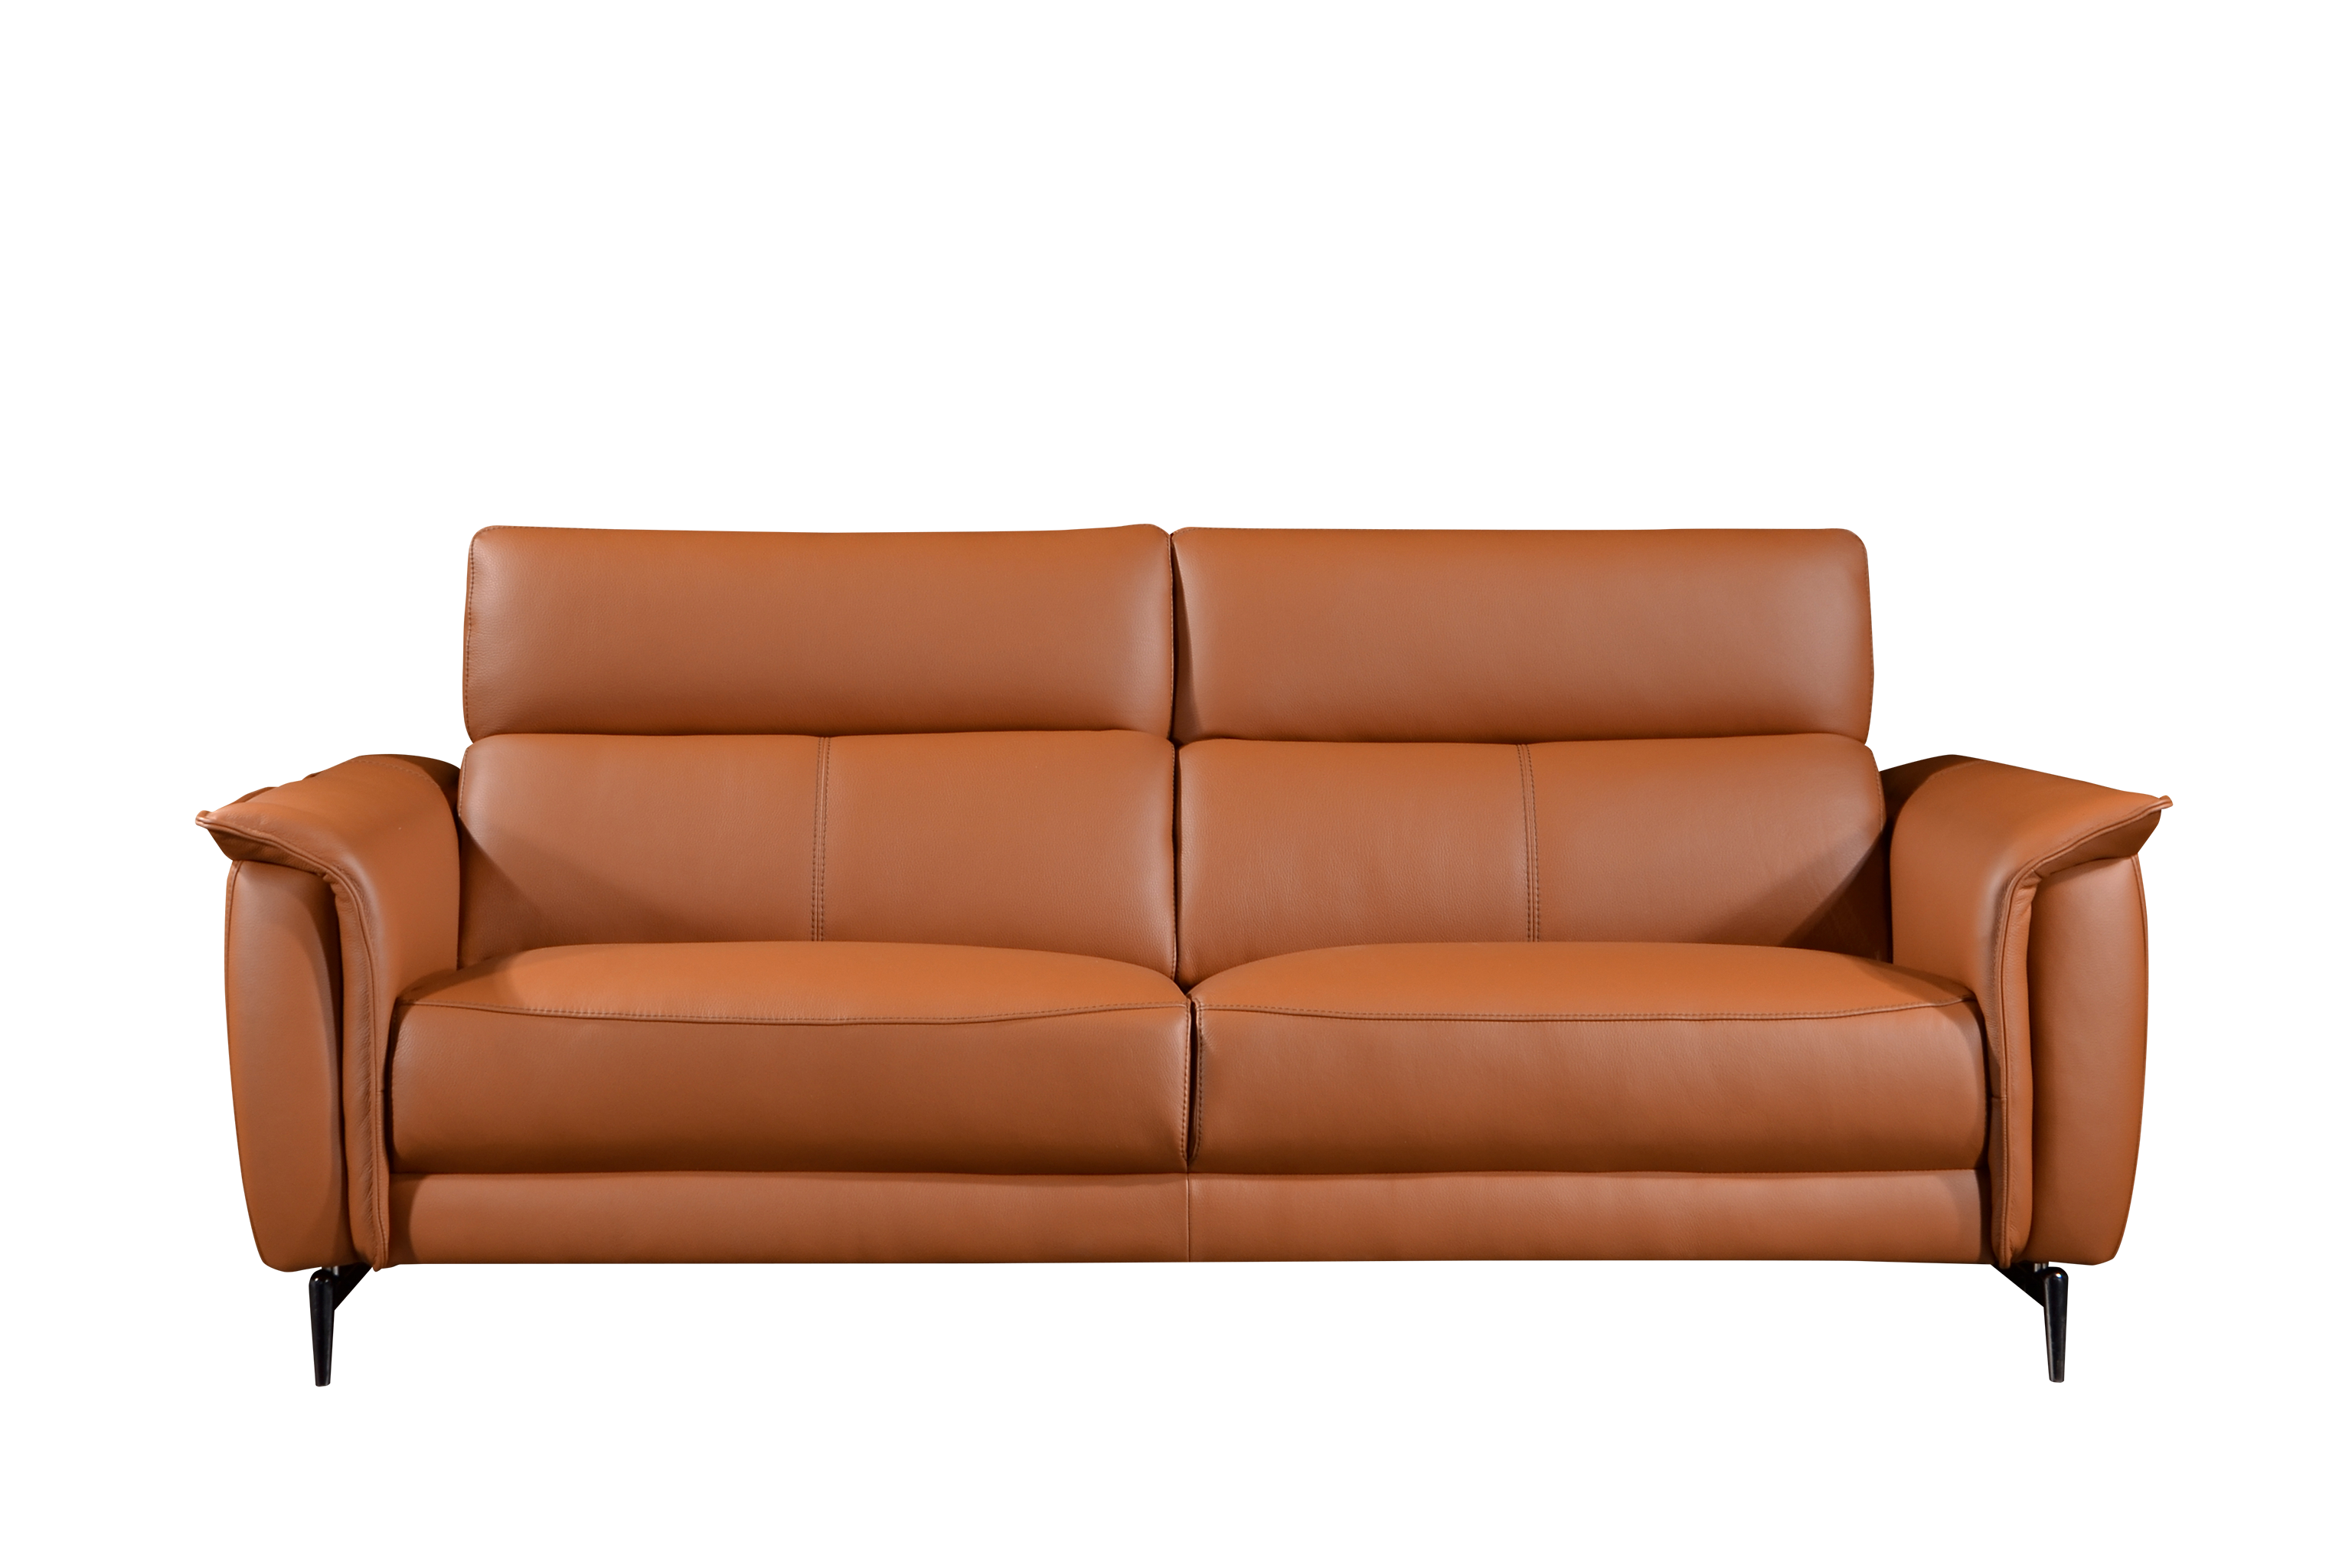 RIVIERA 2.5 Seater Sofa In Leather By Castilla